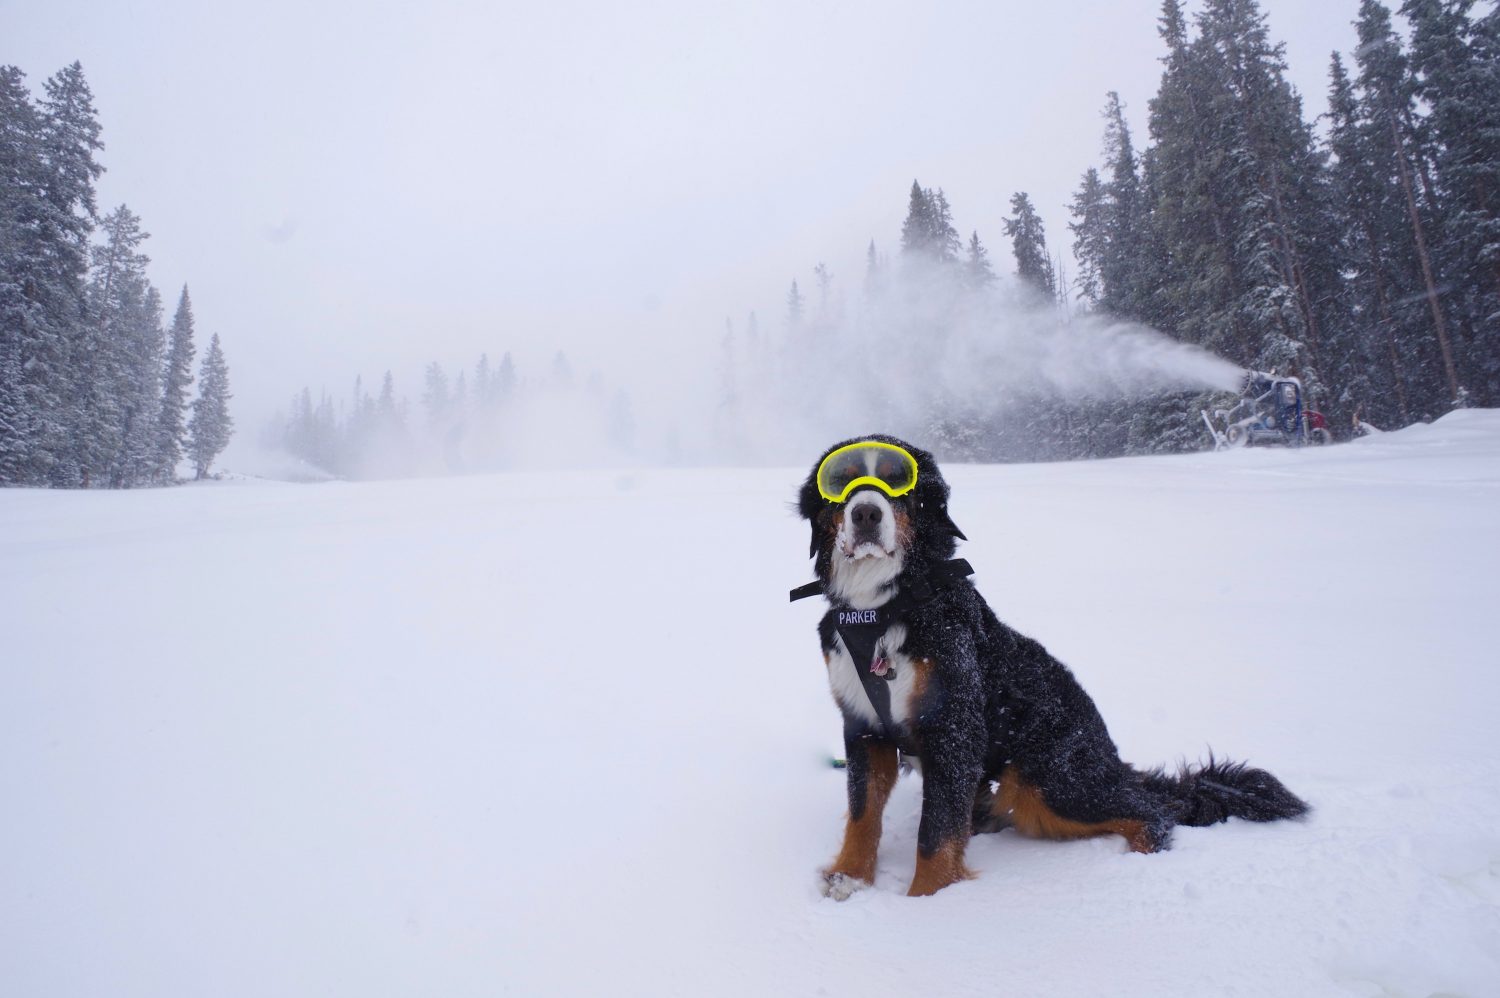 Loveland Ski Area - Powder Dogs, Powder Alliance. Several new resorts join the Powder Alliance for 2018-19 ski season: